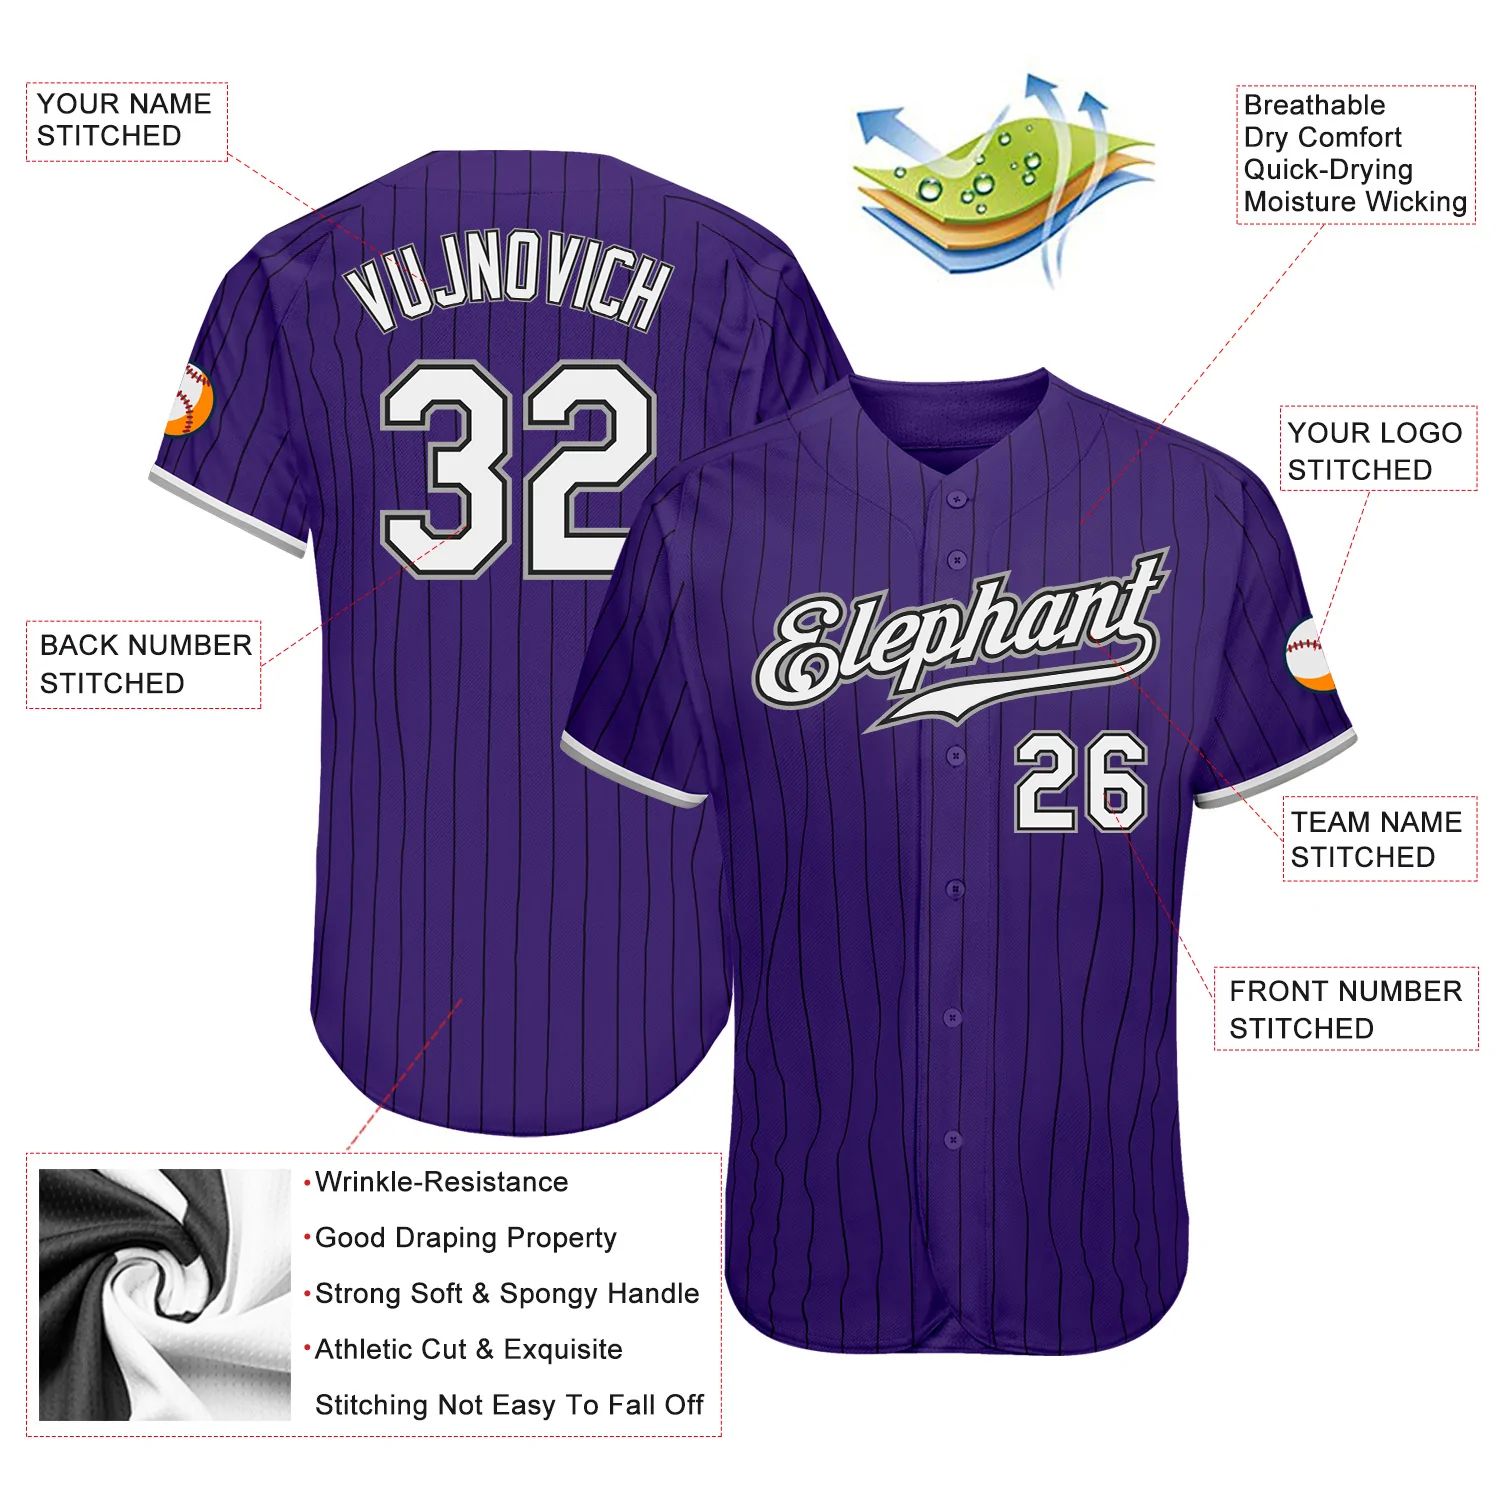 build-gray-purple-pinstripe-baseball-white-jersey-authentic-purple0097-online-3.jpg